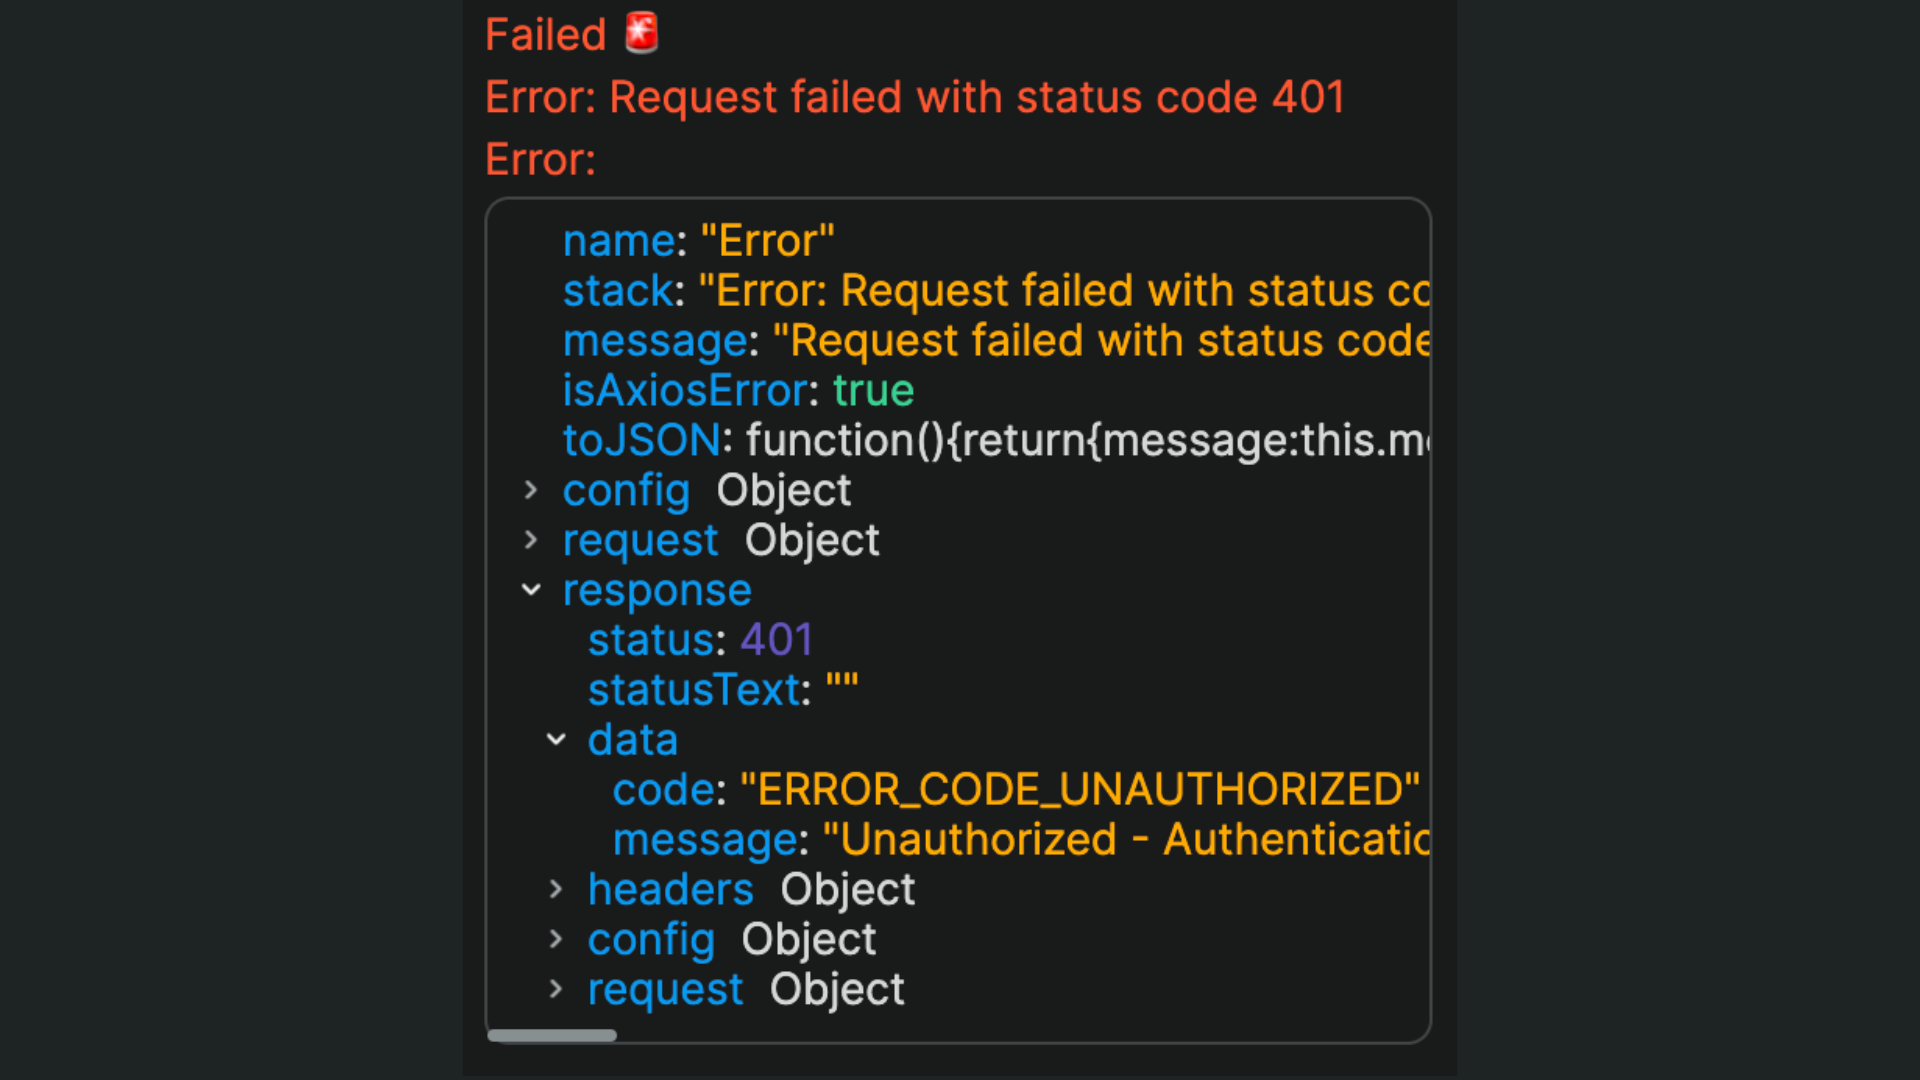 Unauthorized error message